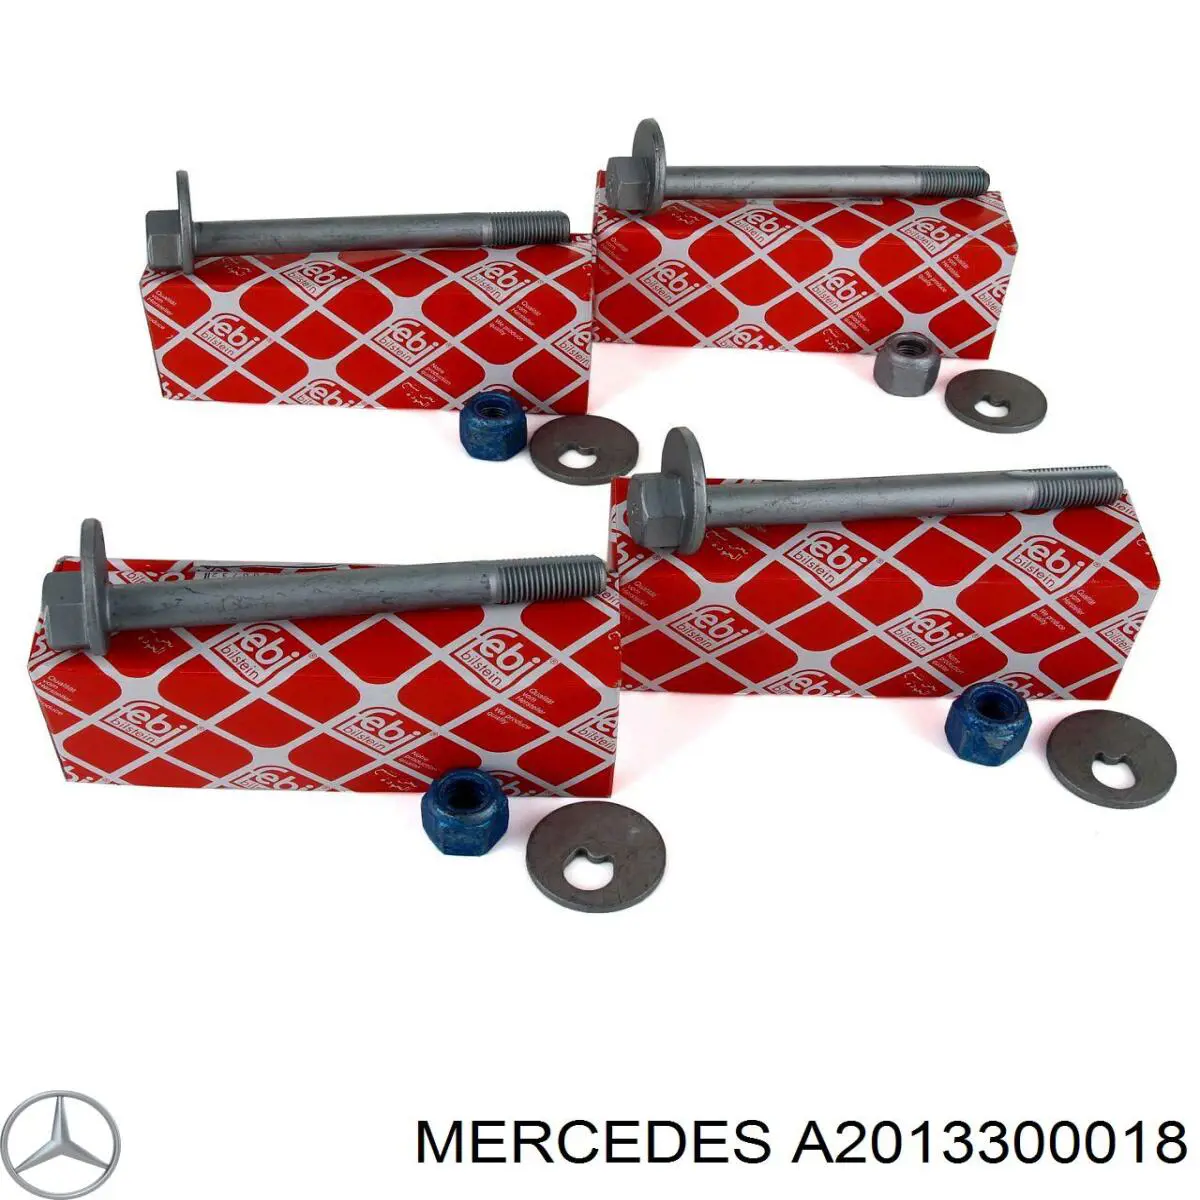 A2013300018 Mercedes juego de montaje, barra oscilante delantera